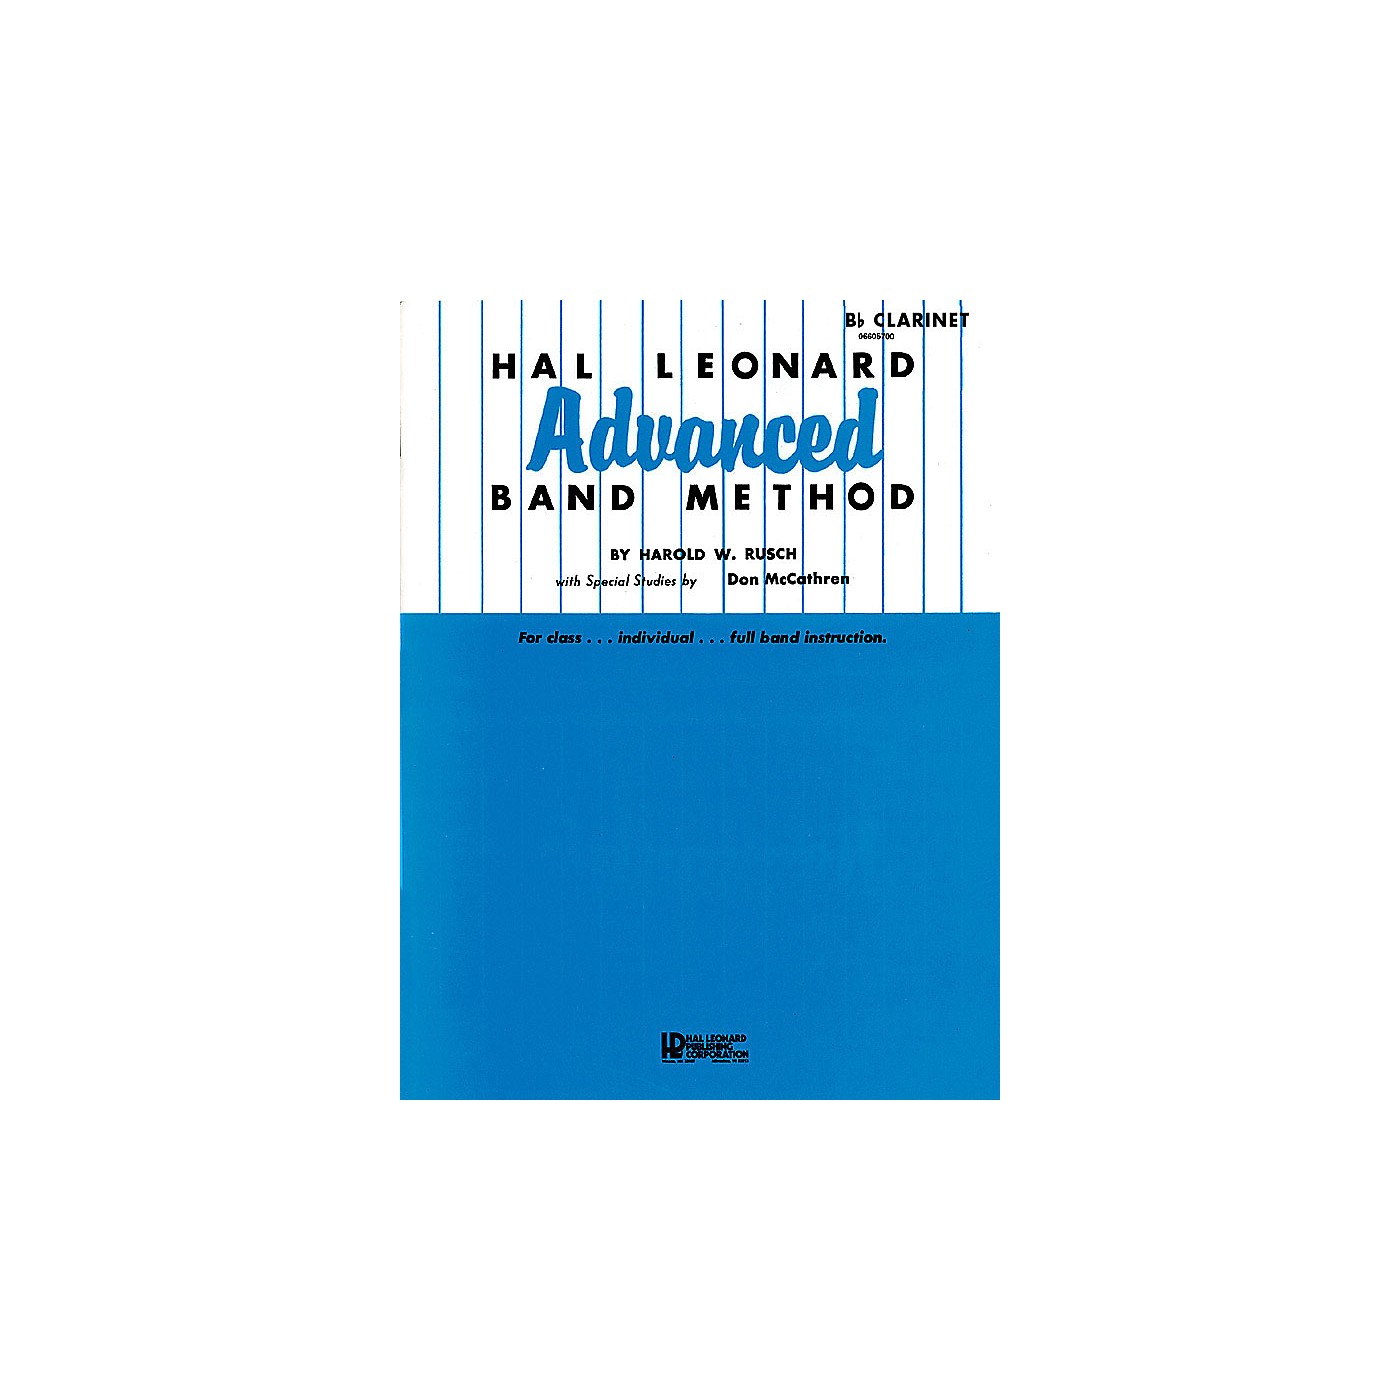 Hal Leonard Hal Leonard Advanced Band Method (French Horn in E-flat) Advanced Band Method Series by Harold W. Rusch thumbnail